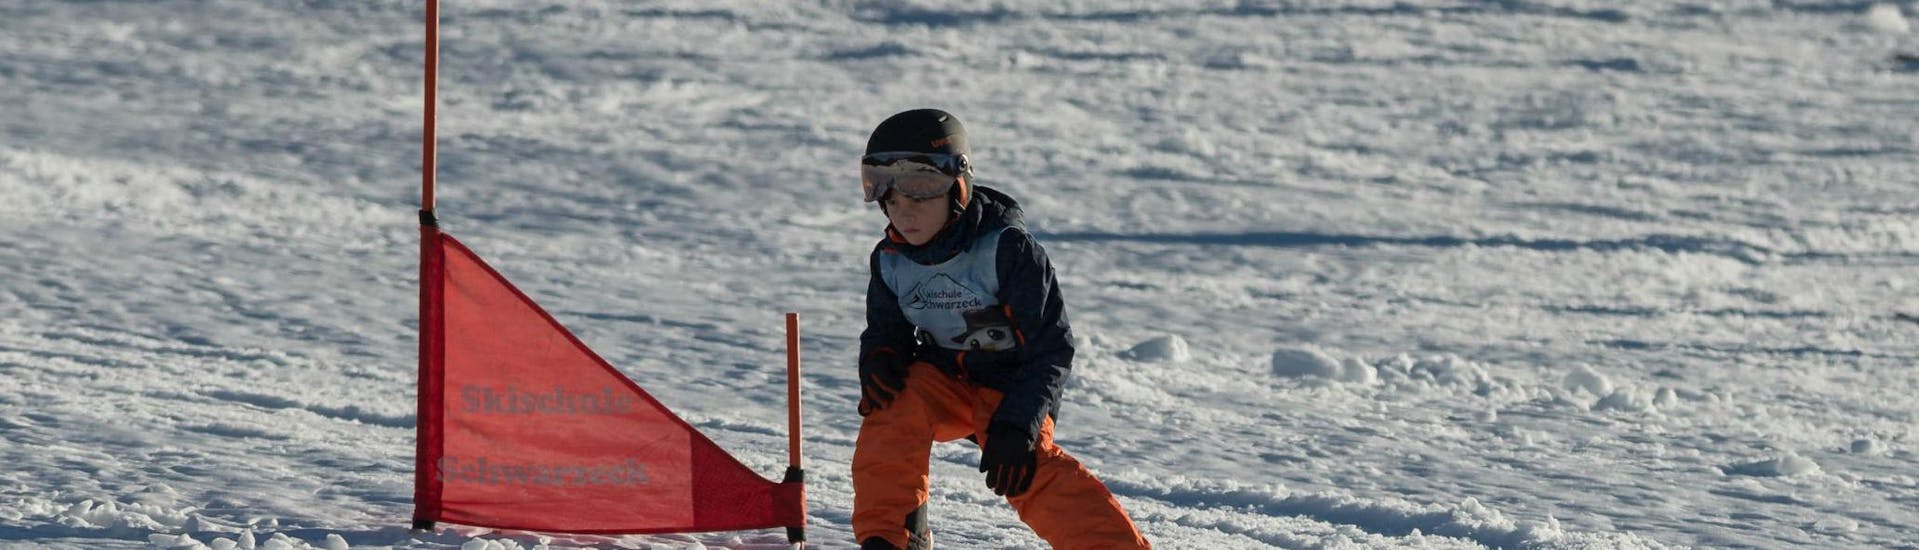 Ski Lessons for Kids (7-15 years) - Christmas.